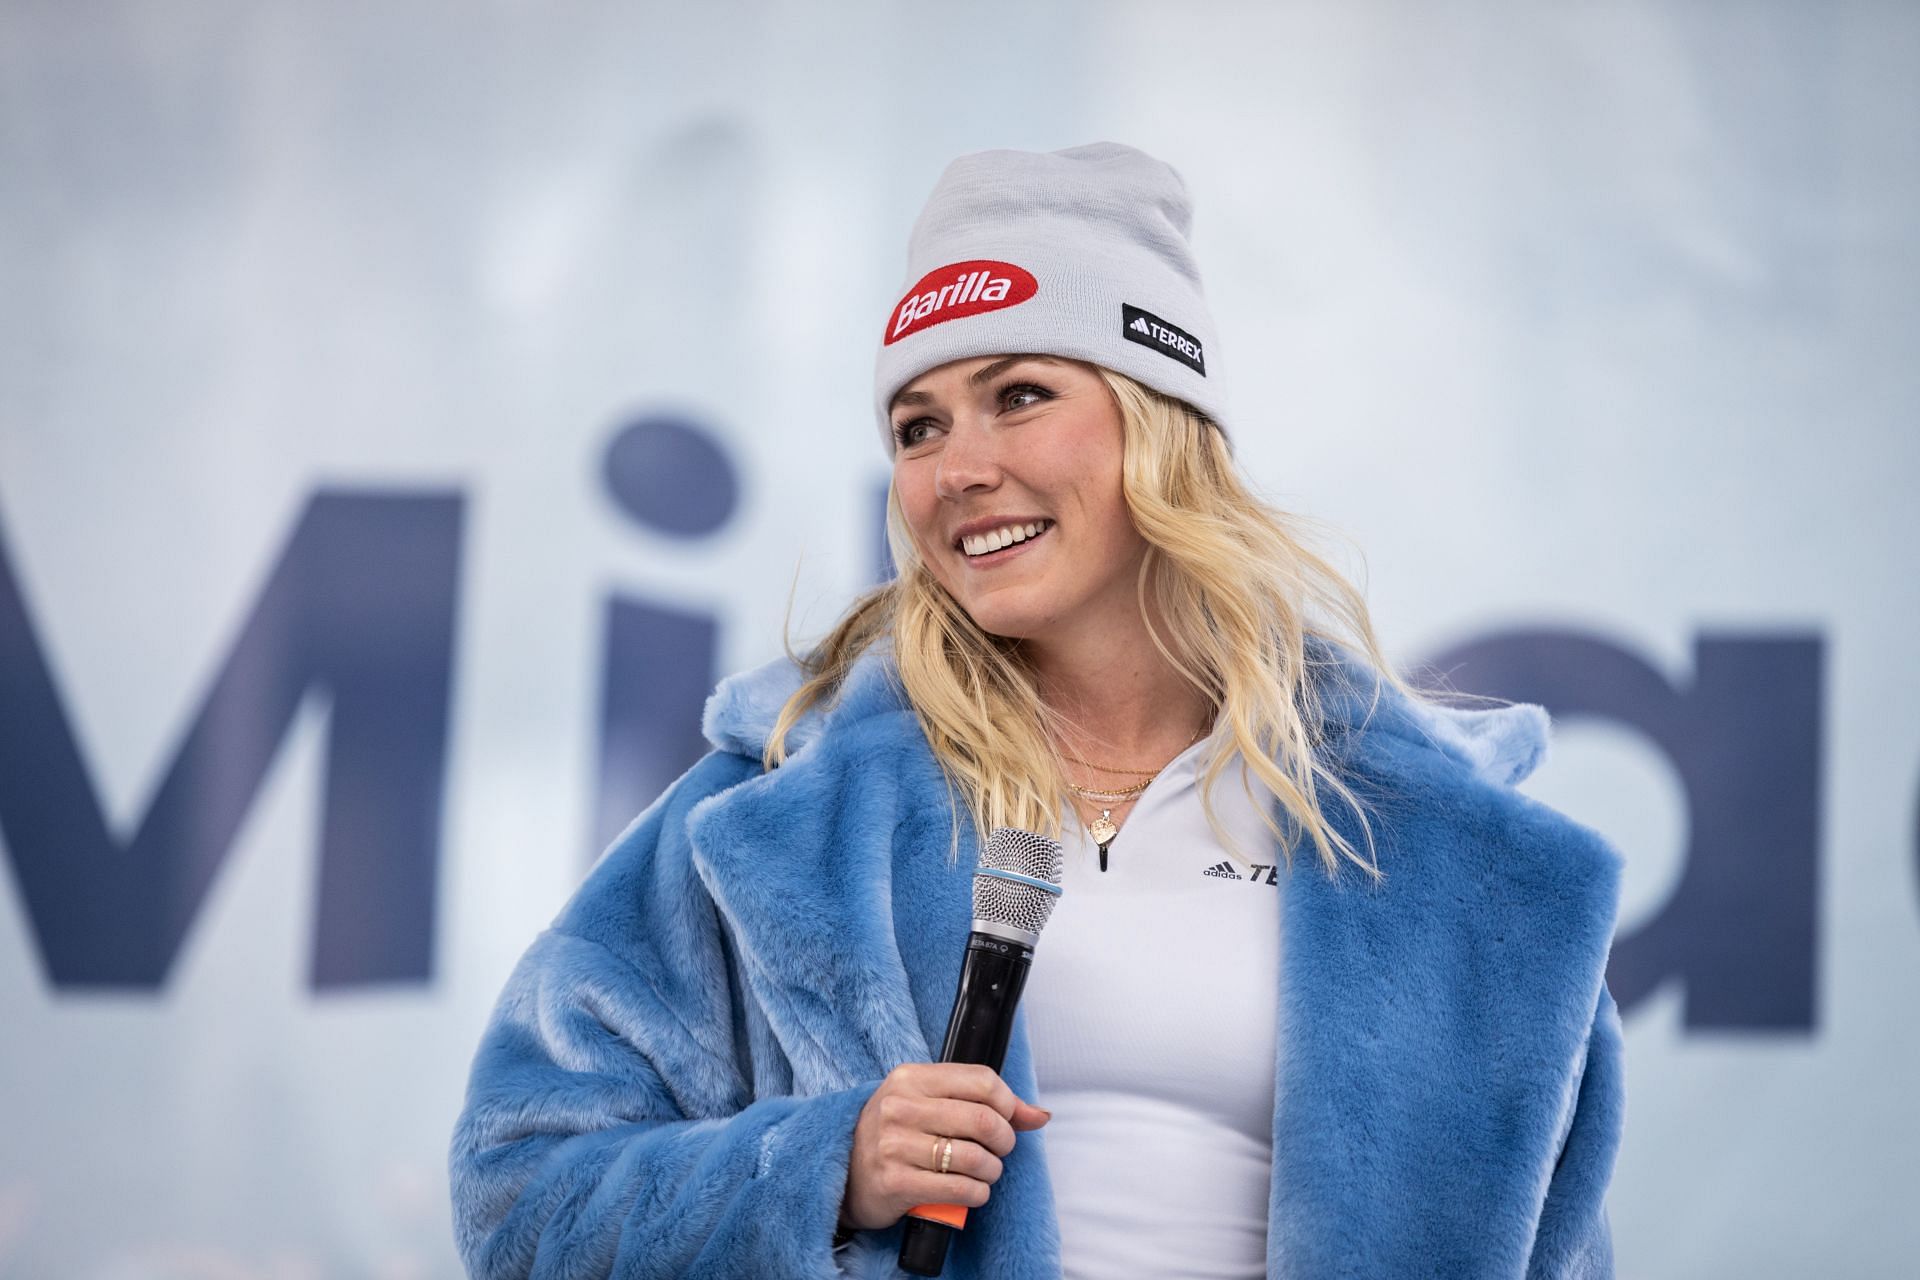 Vail Valley Honors Alpine Ski Racer Mikaela Shiffrin